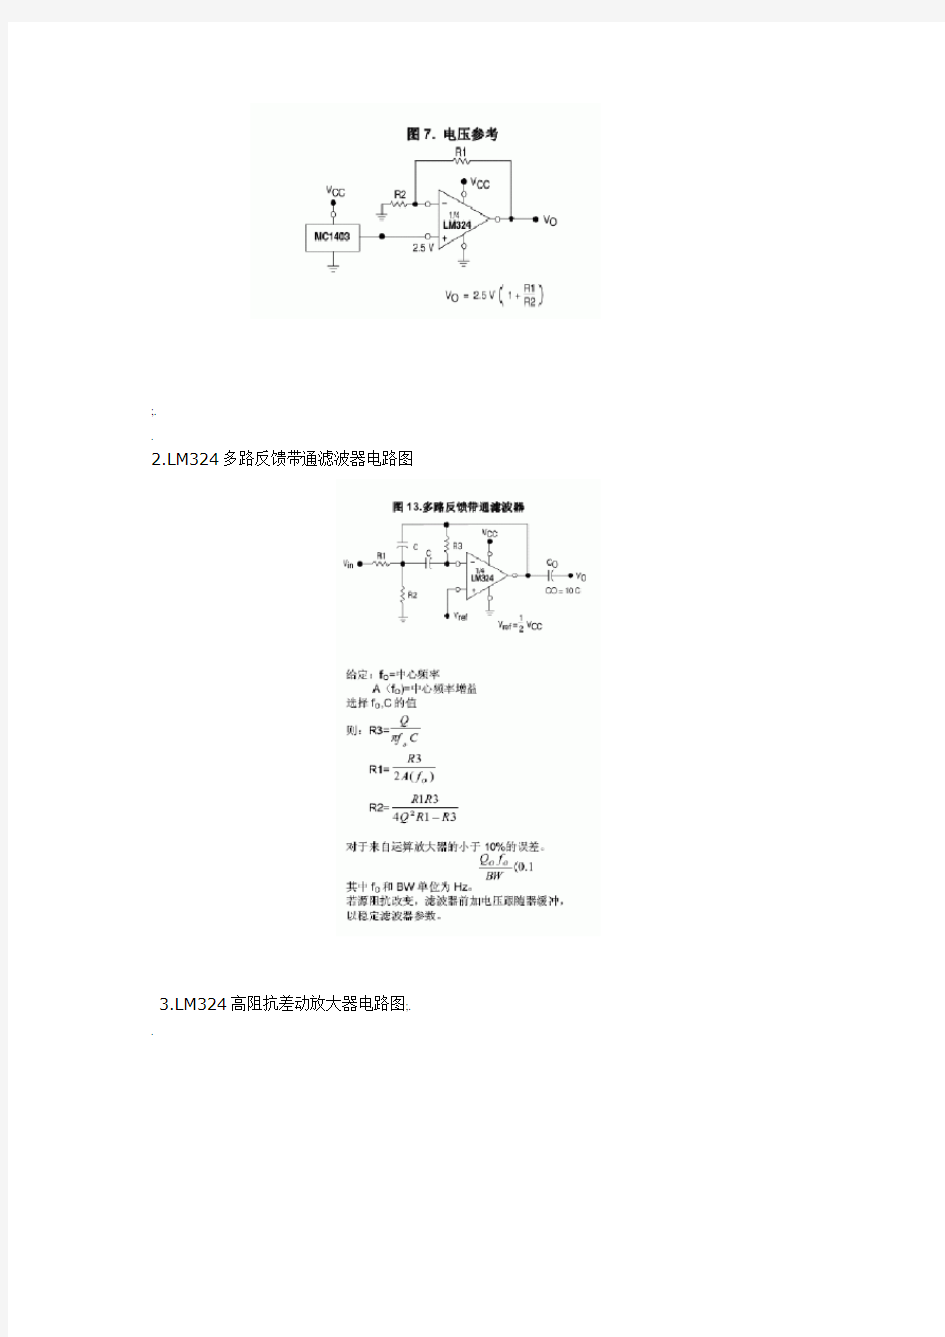 LM324应用电路图